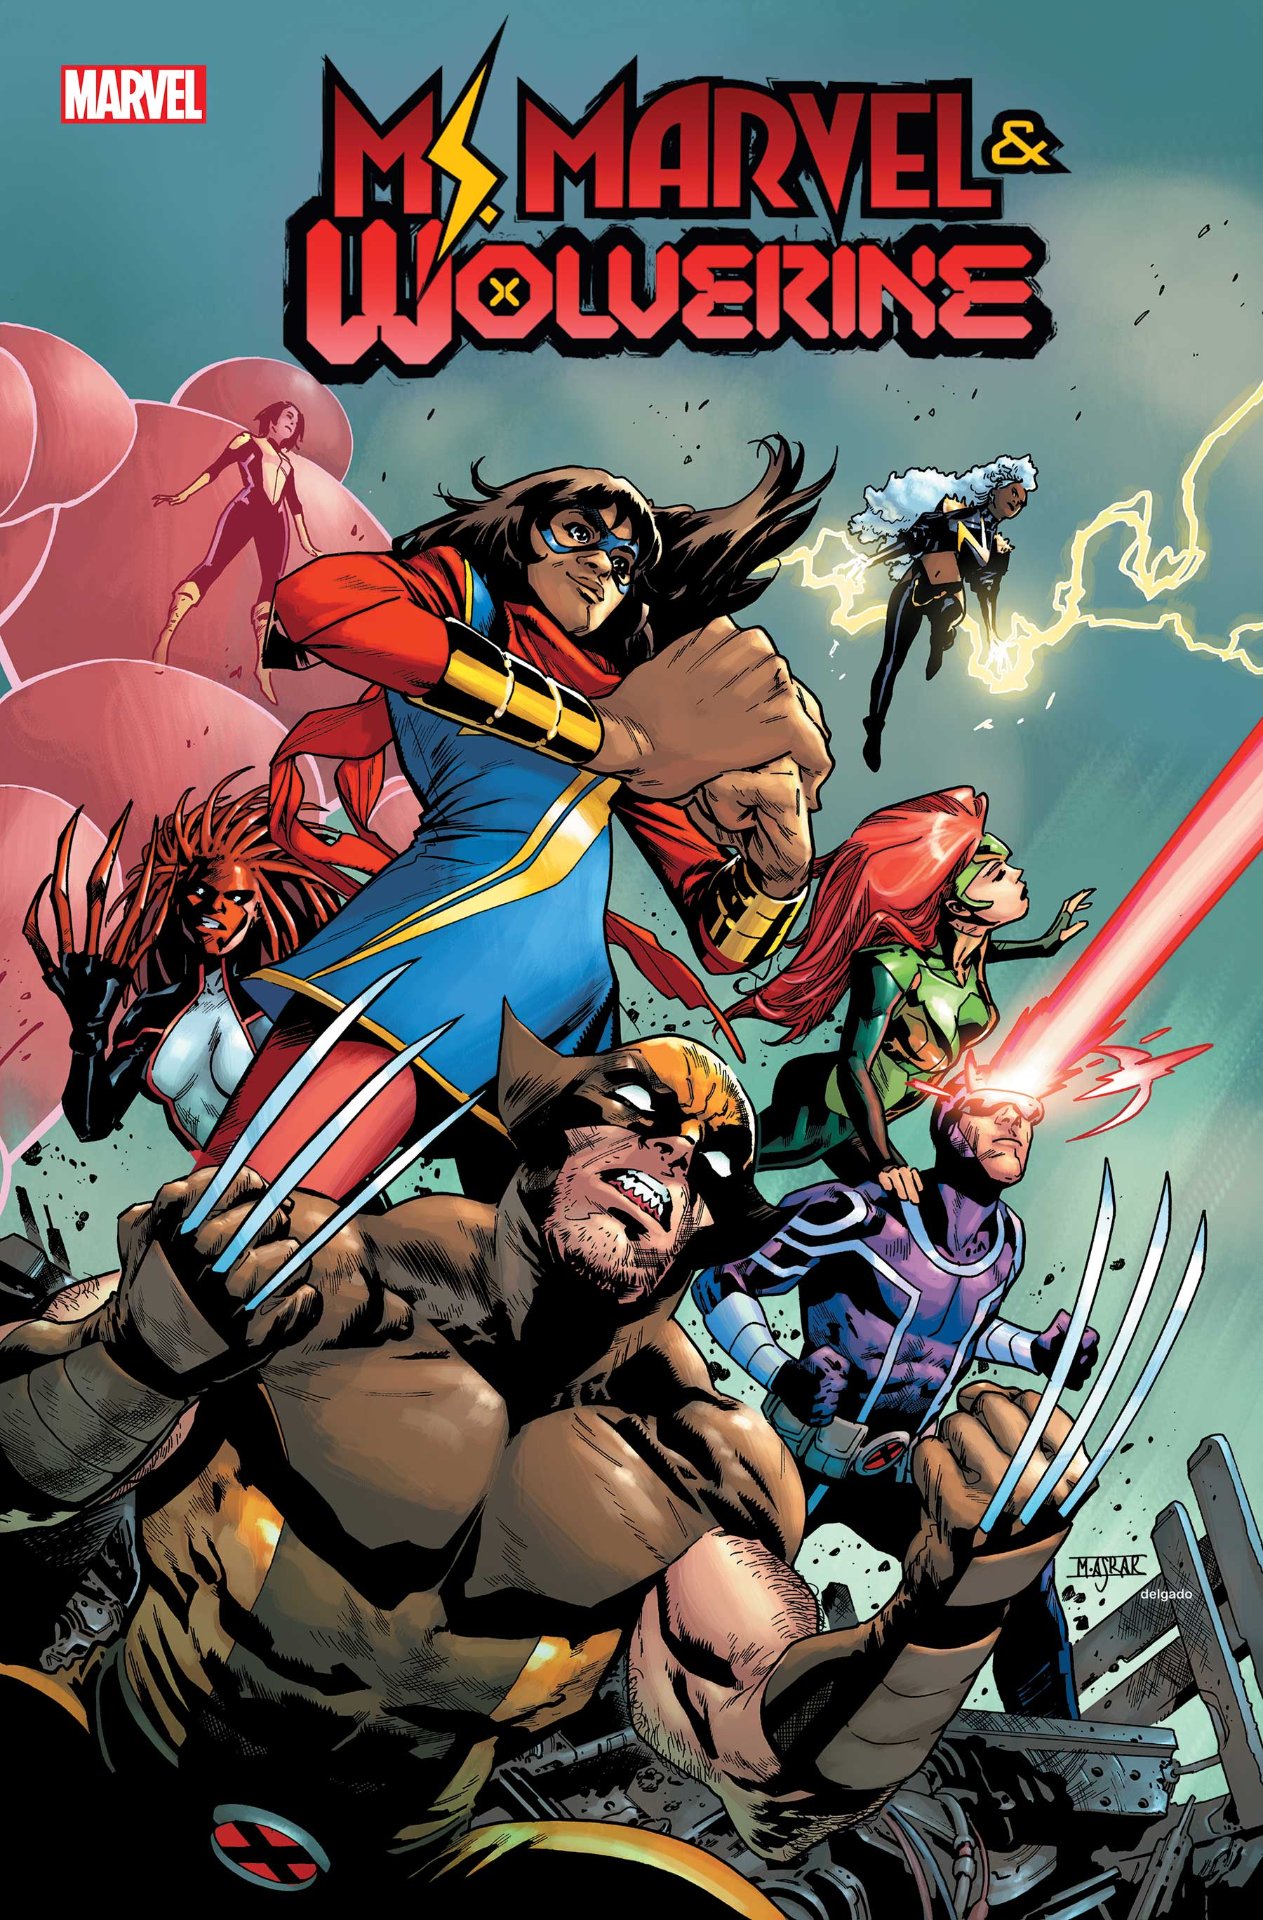 Ms. Marvel & Wolverine #1 cover art by Mahmud Asrar